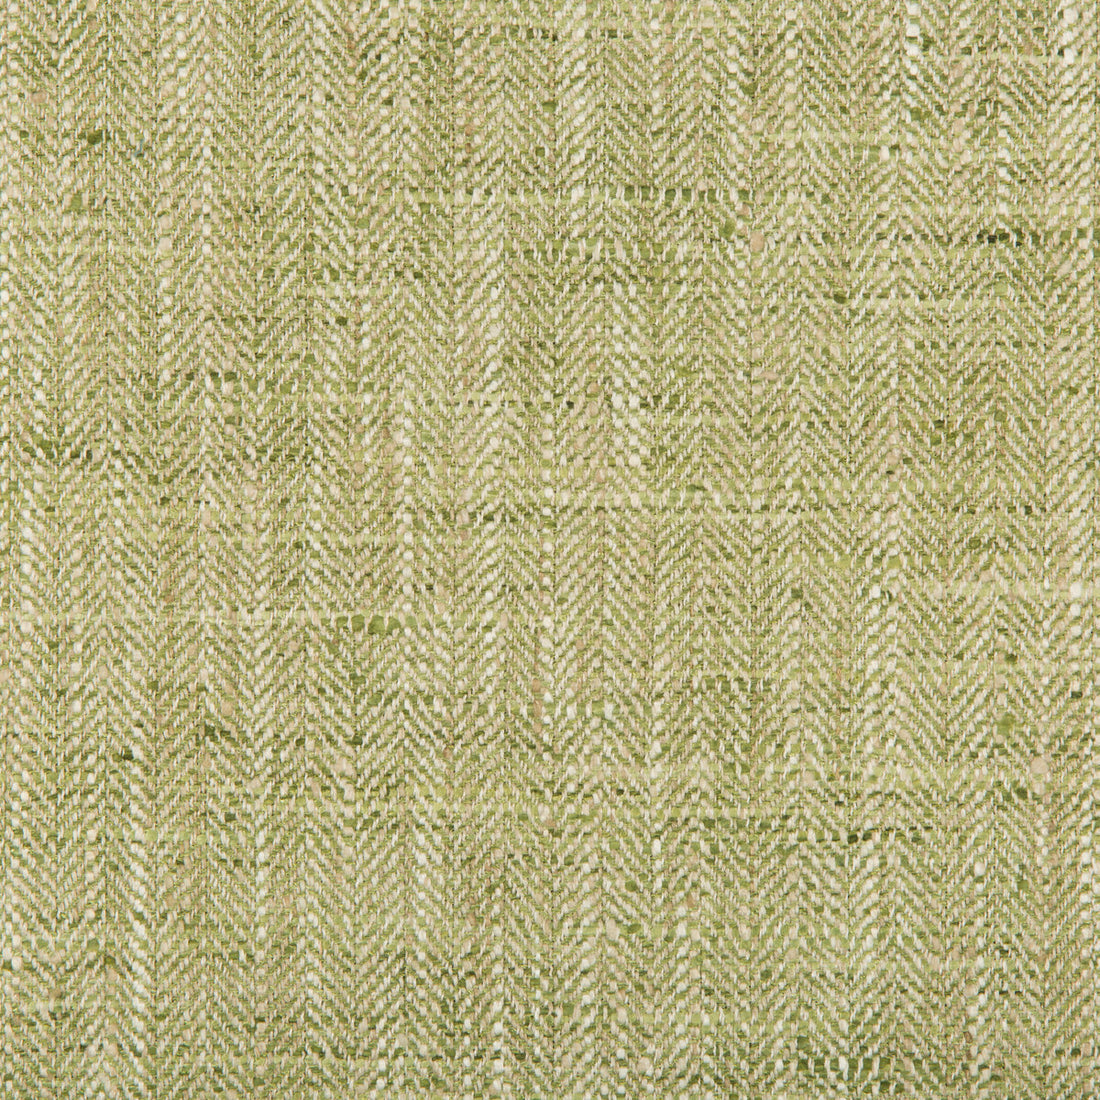 Kravet Smart fabric in 34088-23 color - pattern 34088.23.0 - by Kravet Smart